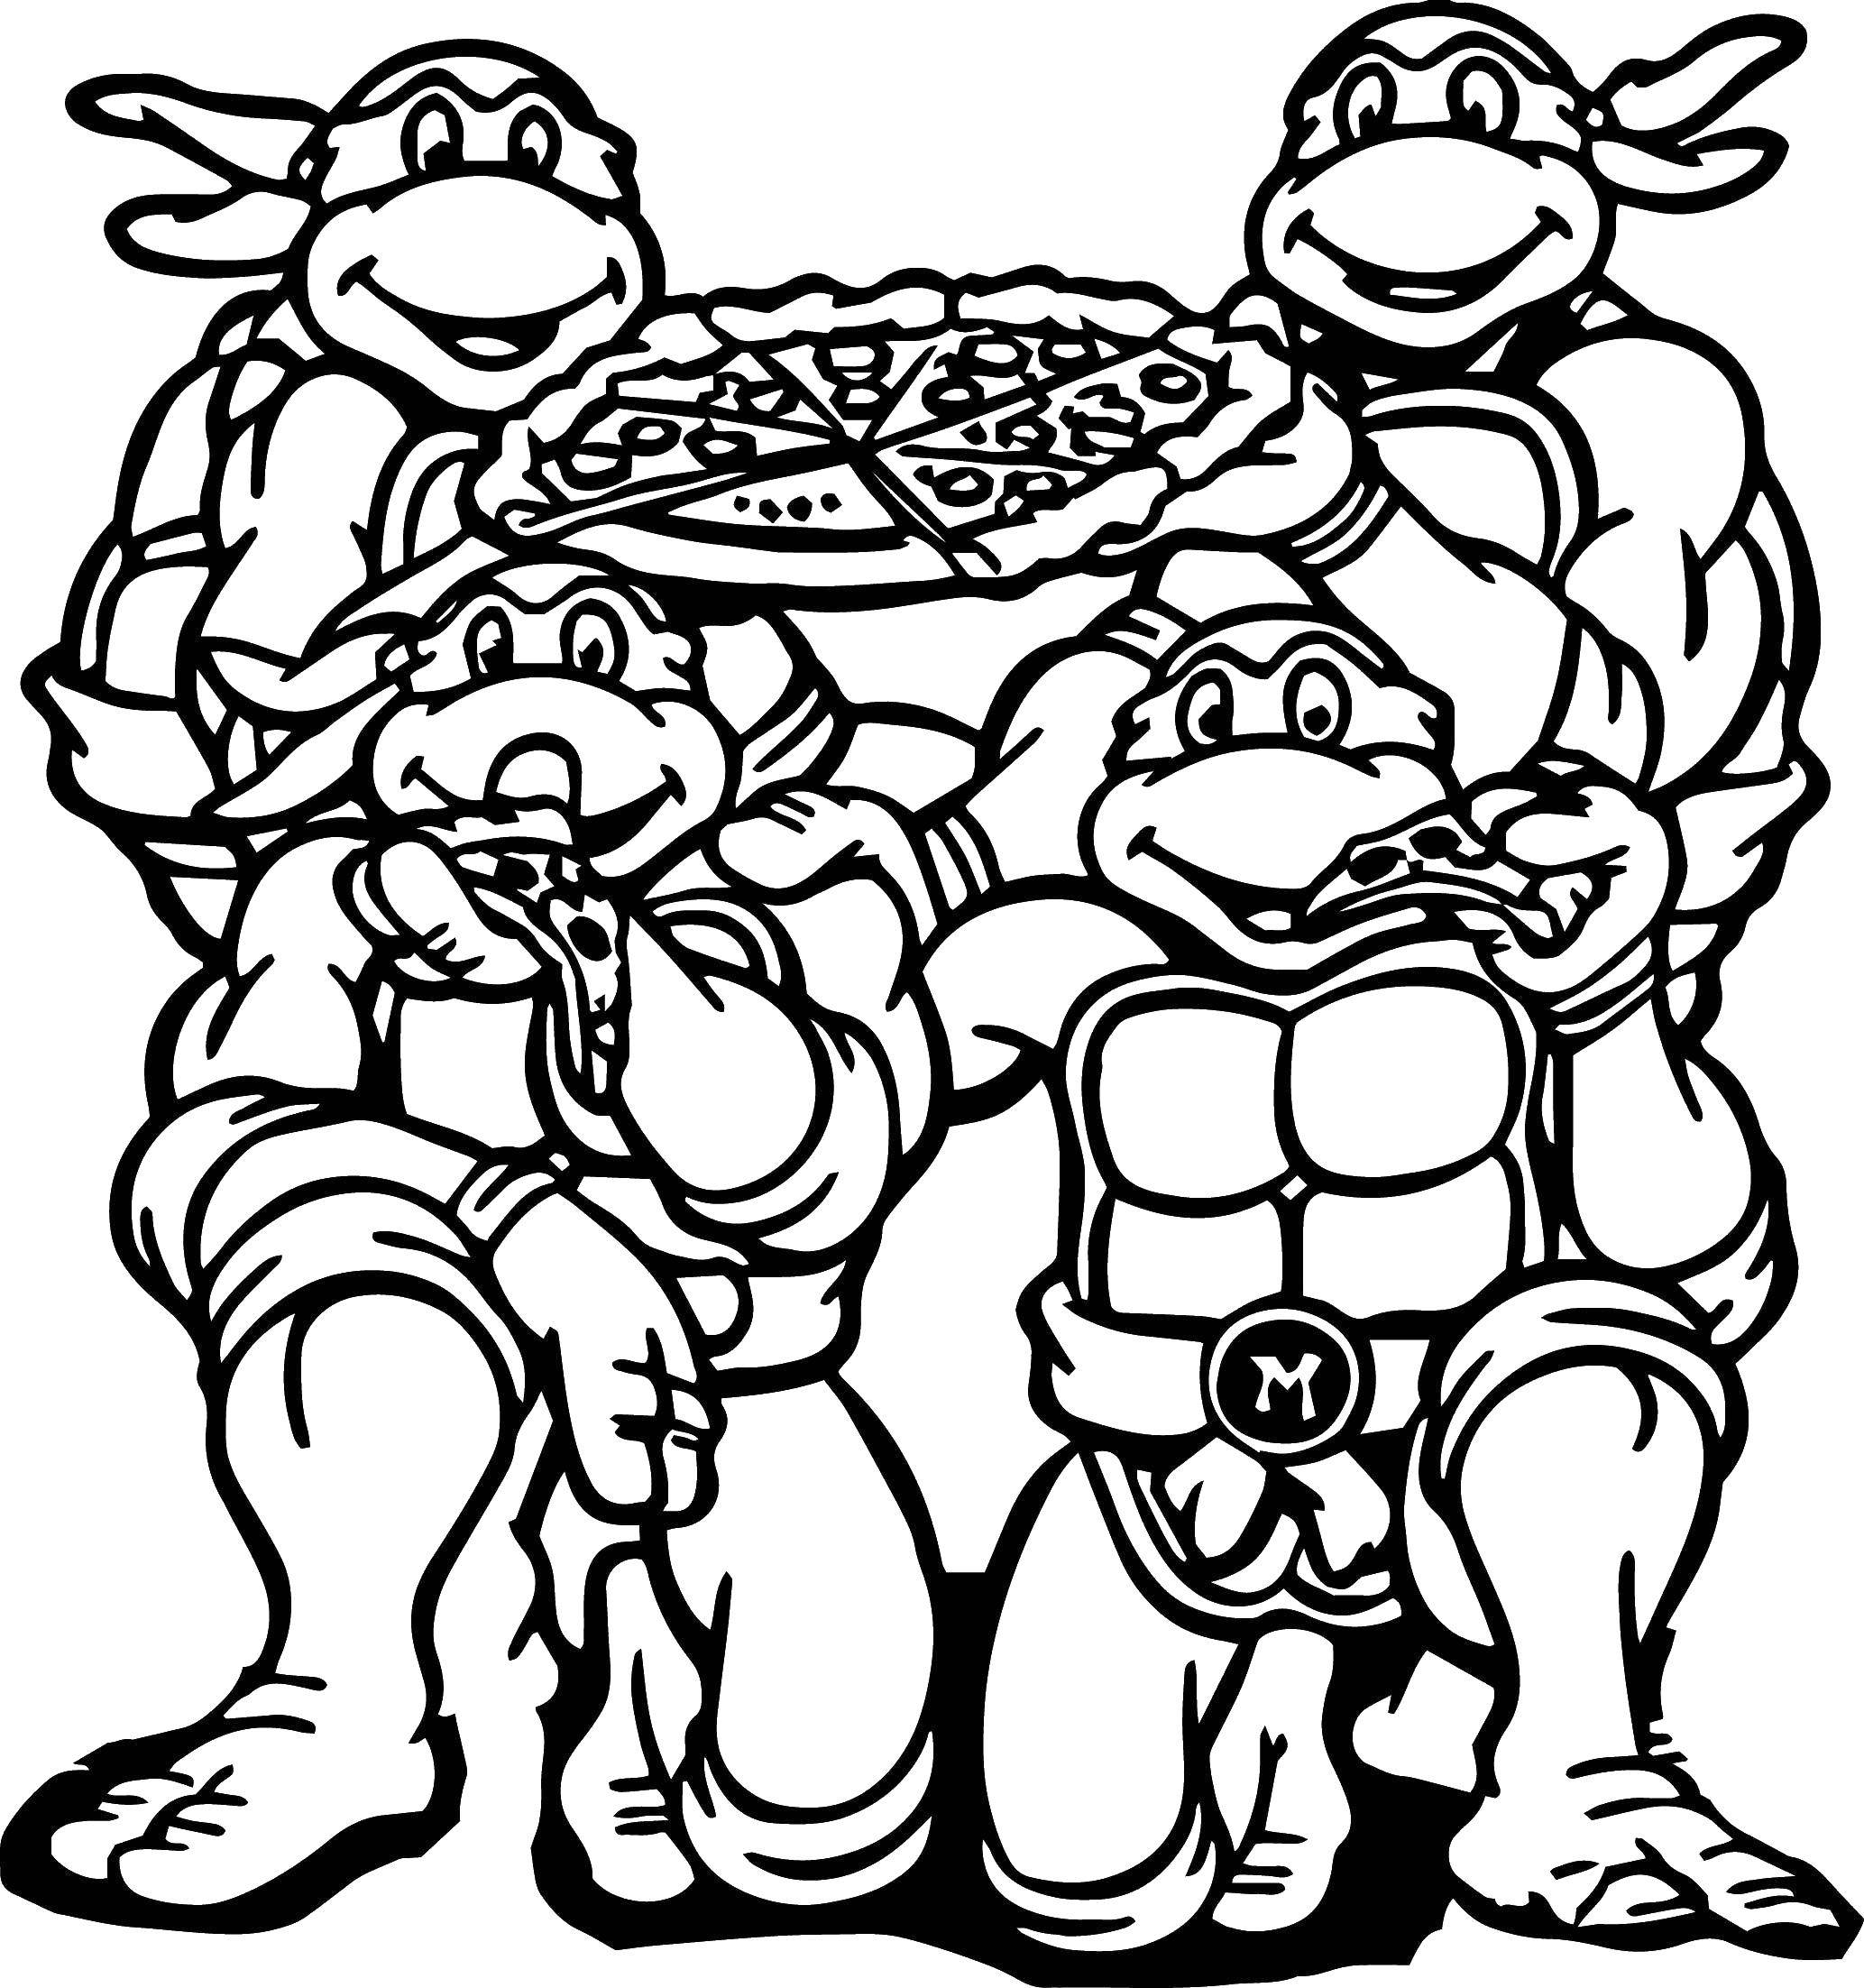 Coloring Teenage mutant ninja turtles love to eat pizza. Category teenage mutant ninja turtles. Tags:  teenage mutant ninja turtles.